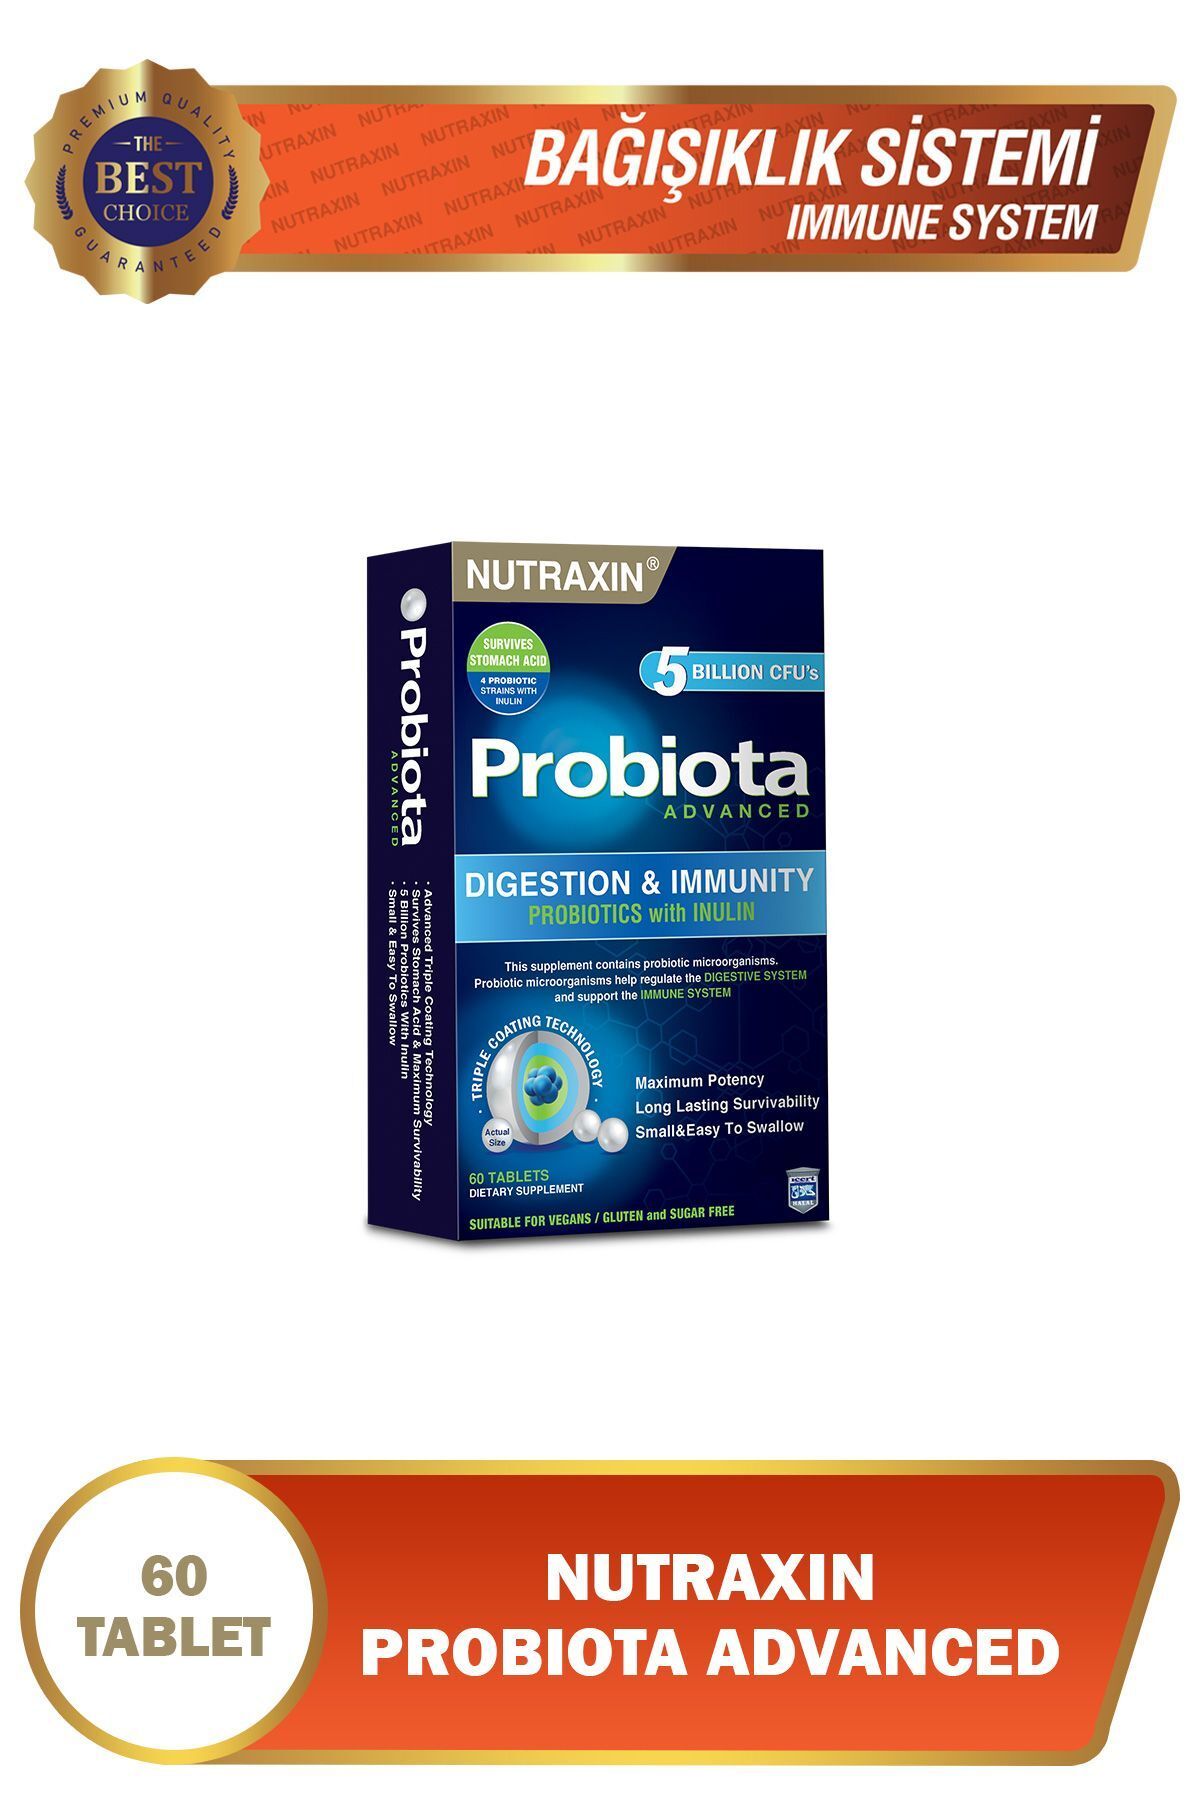 Nutraxin Probiota Advanced 60 Tablet - 5 Milyar Canlı Probiyotik 3 Katmanlı Tablet Teknolojisi